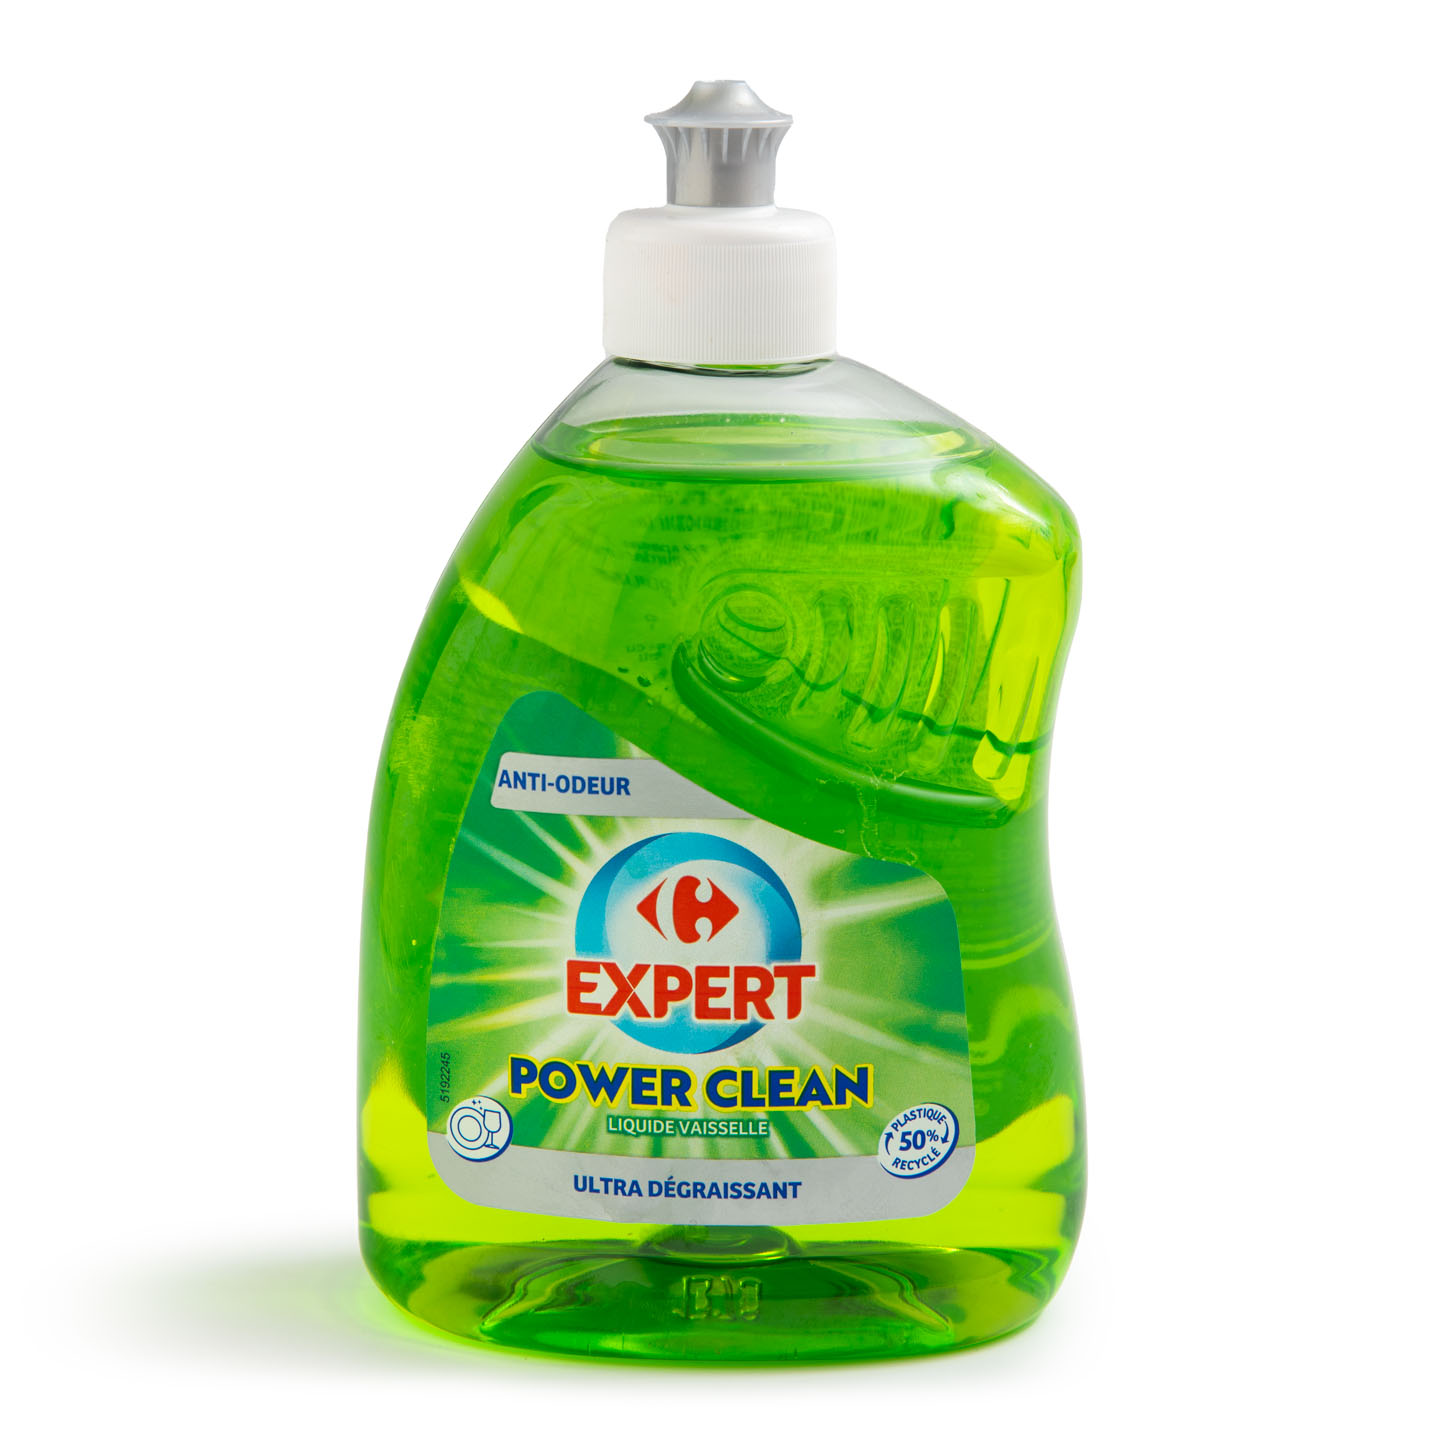 Detergent de vase ultradegresant Power Clean Carrefour Expert 500ml